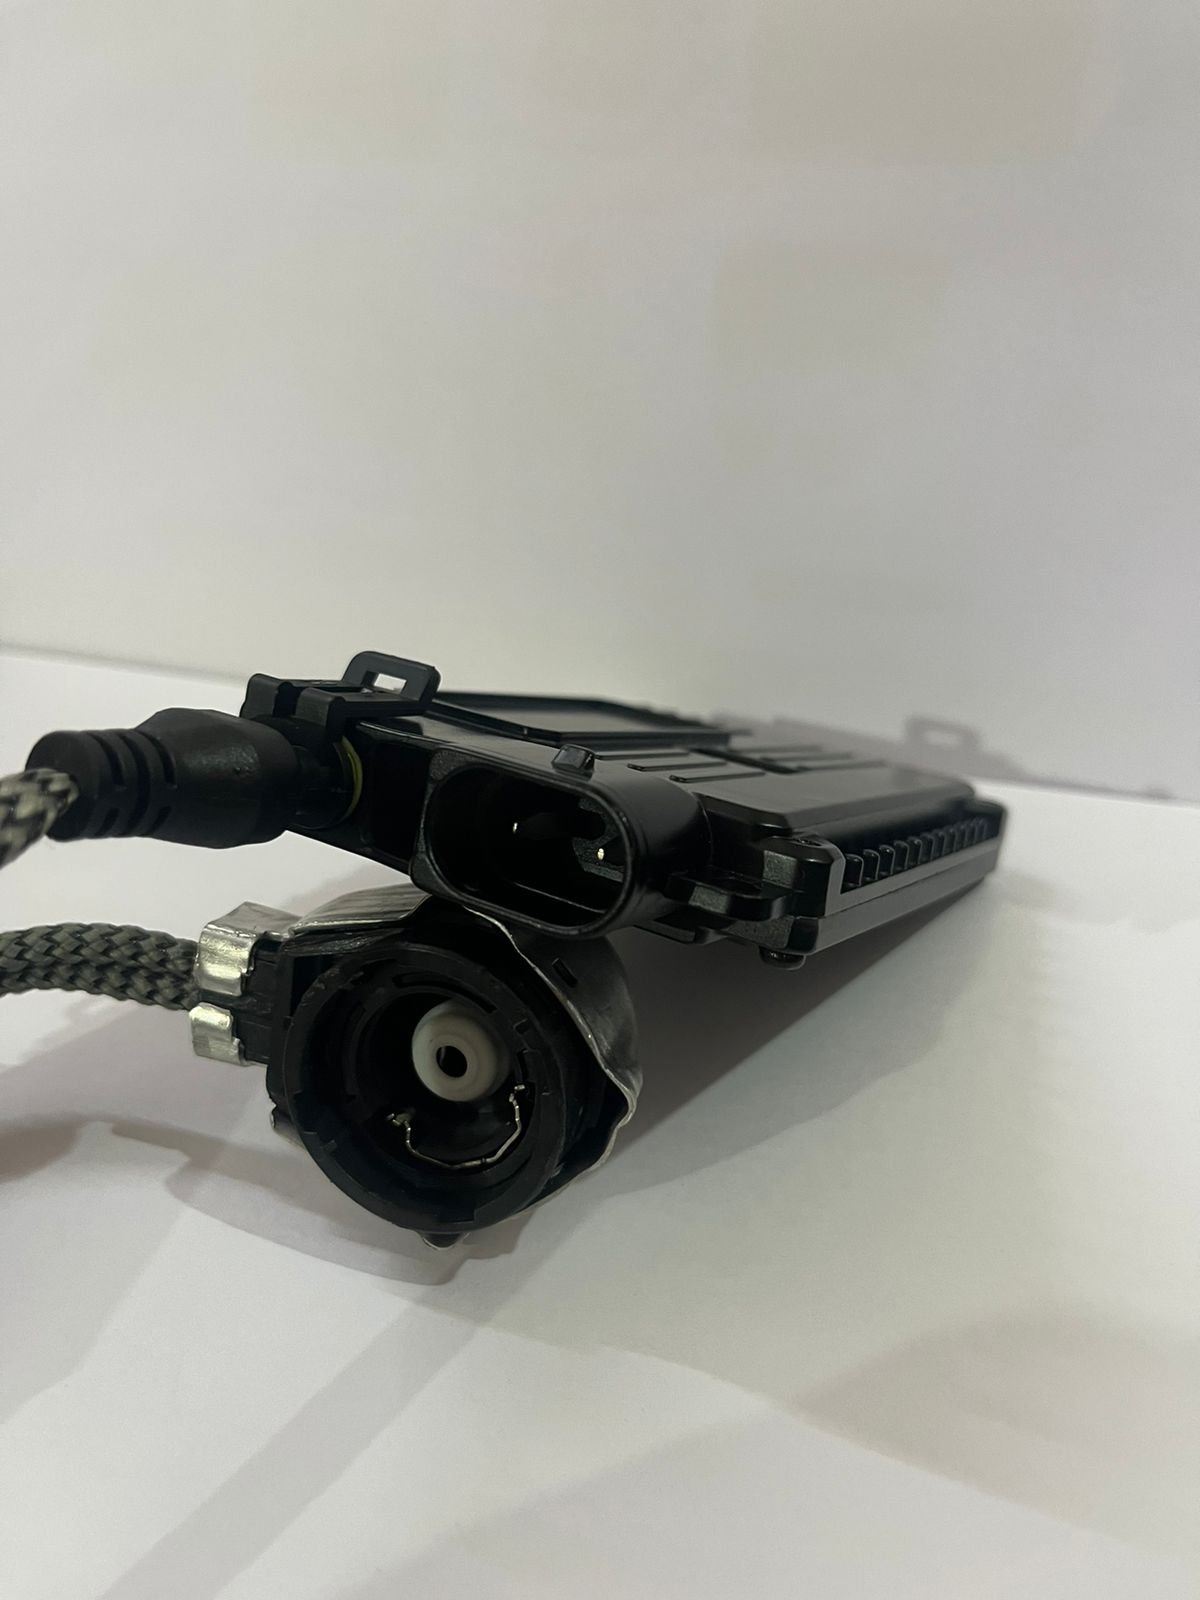 D4S D4R Headlight Unit Controller Xenon HID Ballast Module 85967 2019-2012 Image 